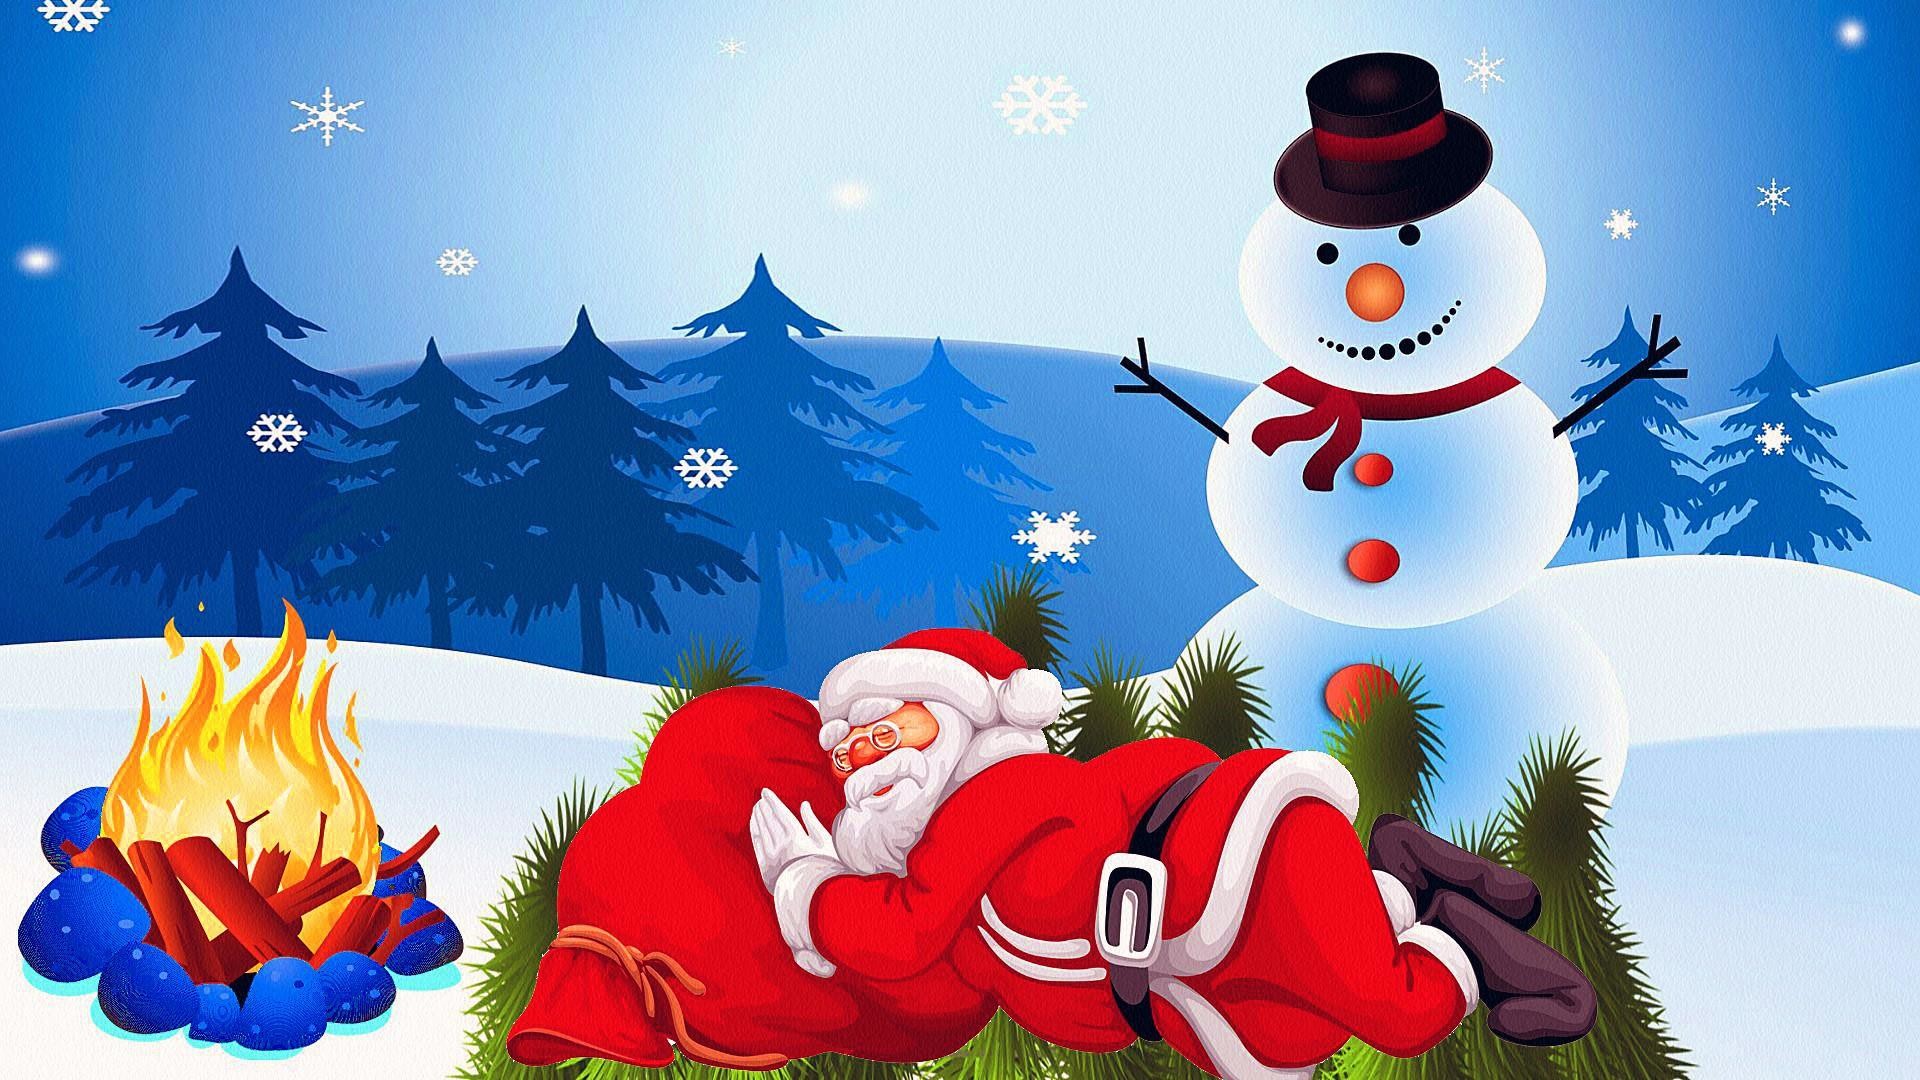 1920x1080, Lazy Santa Claus And A Snowman Wallpaper - Winter Season With Snowman - HD Wallpaper 